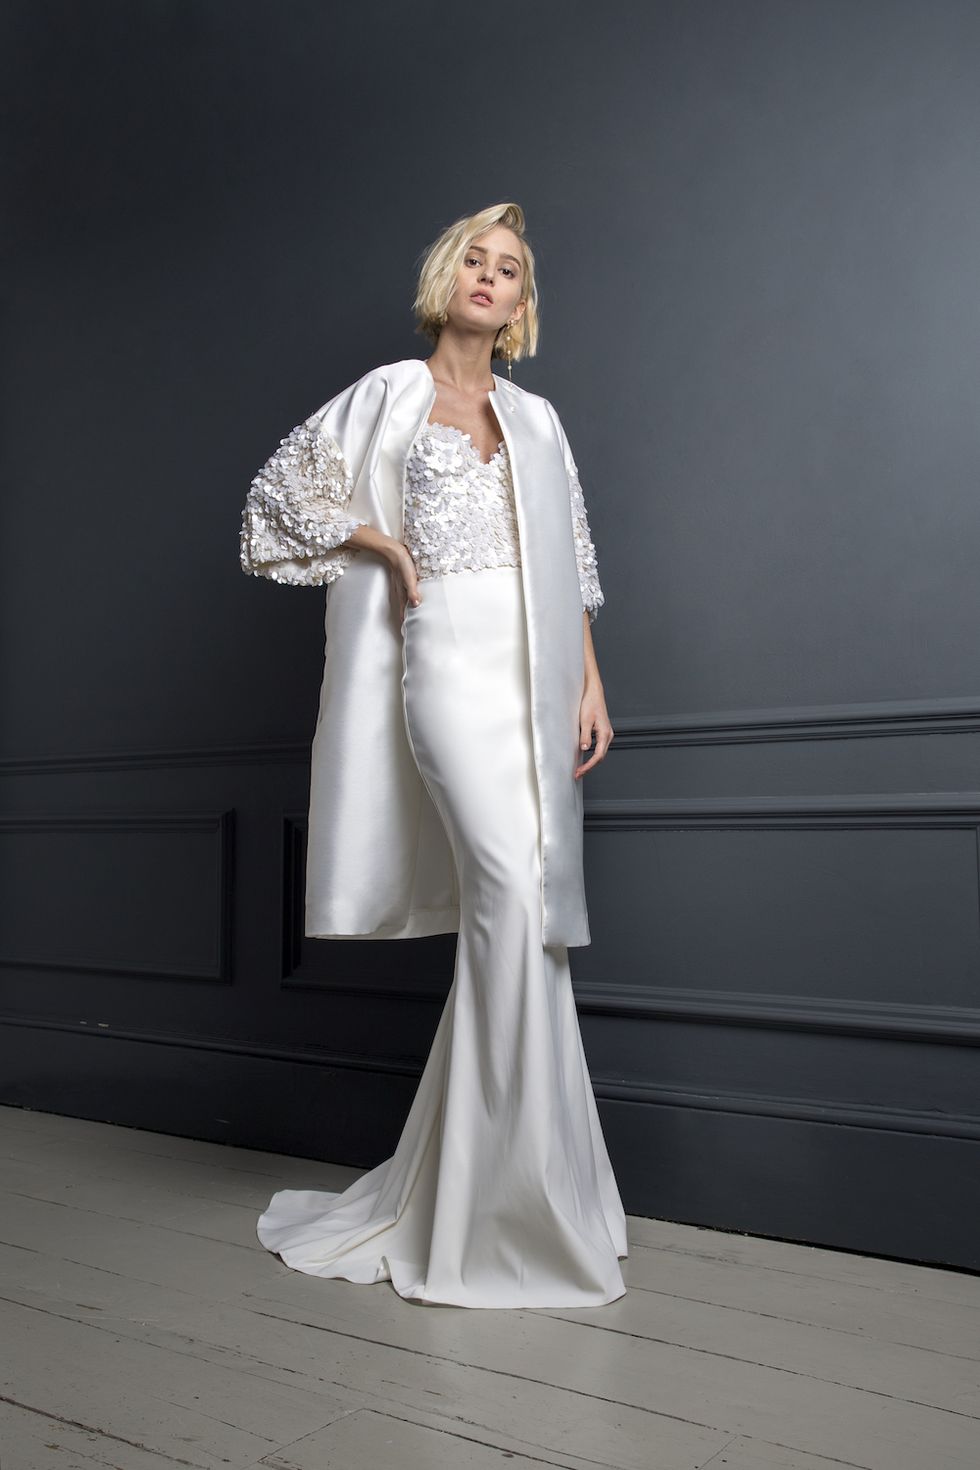 hbz-winter-wedding-dresses-alexander-corset-tobi-skirt-worn-under-the-duffy-coat-4627-1566490250